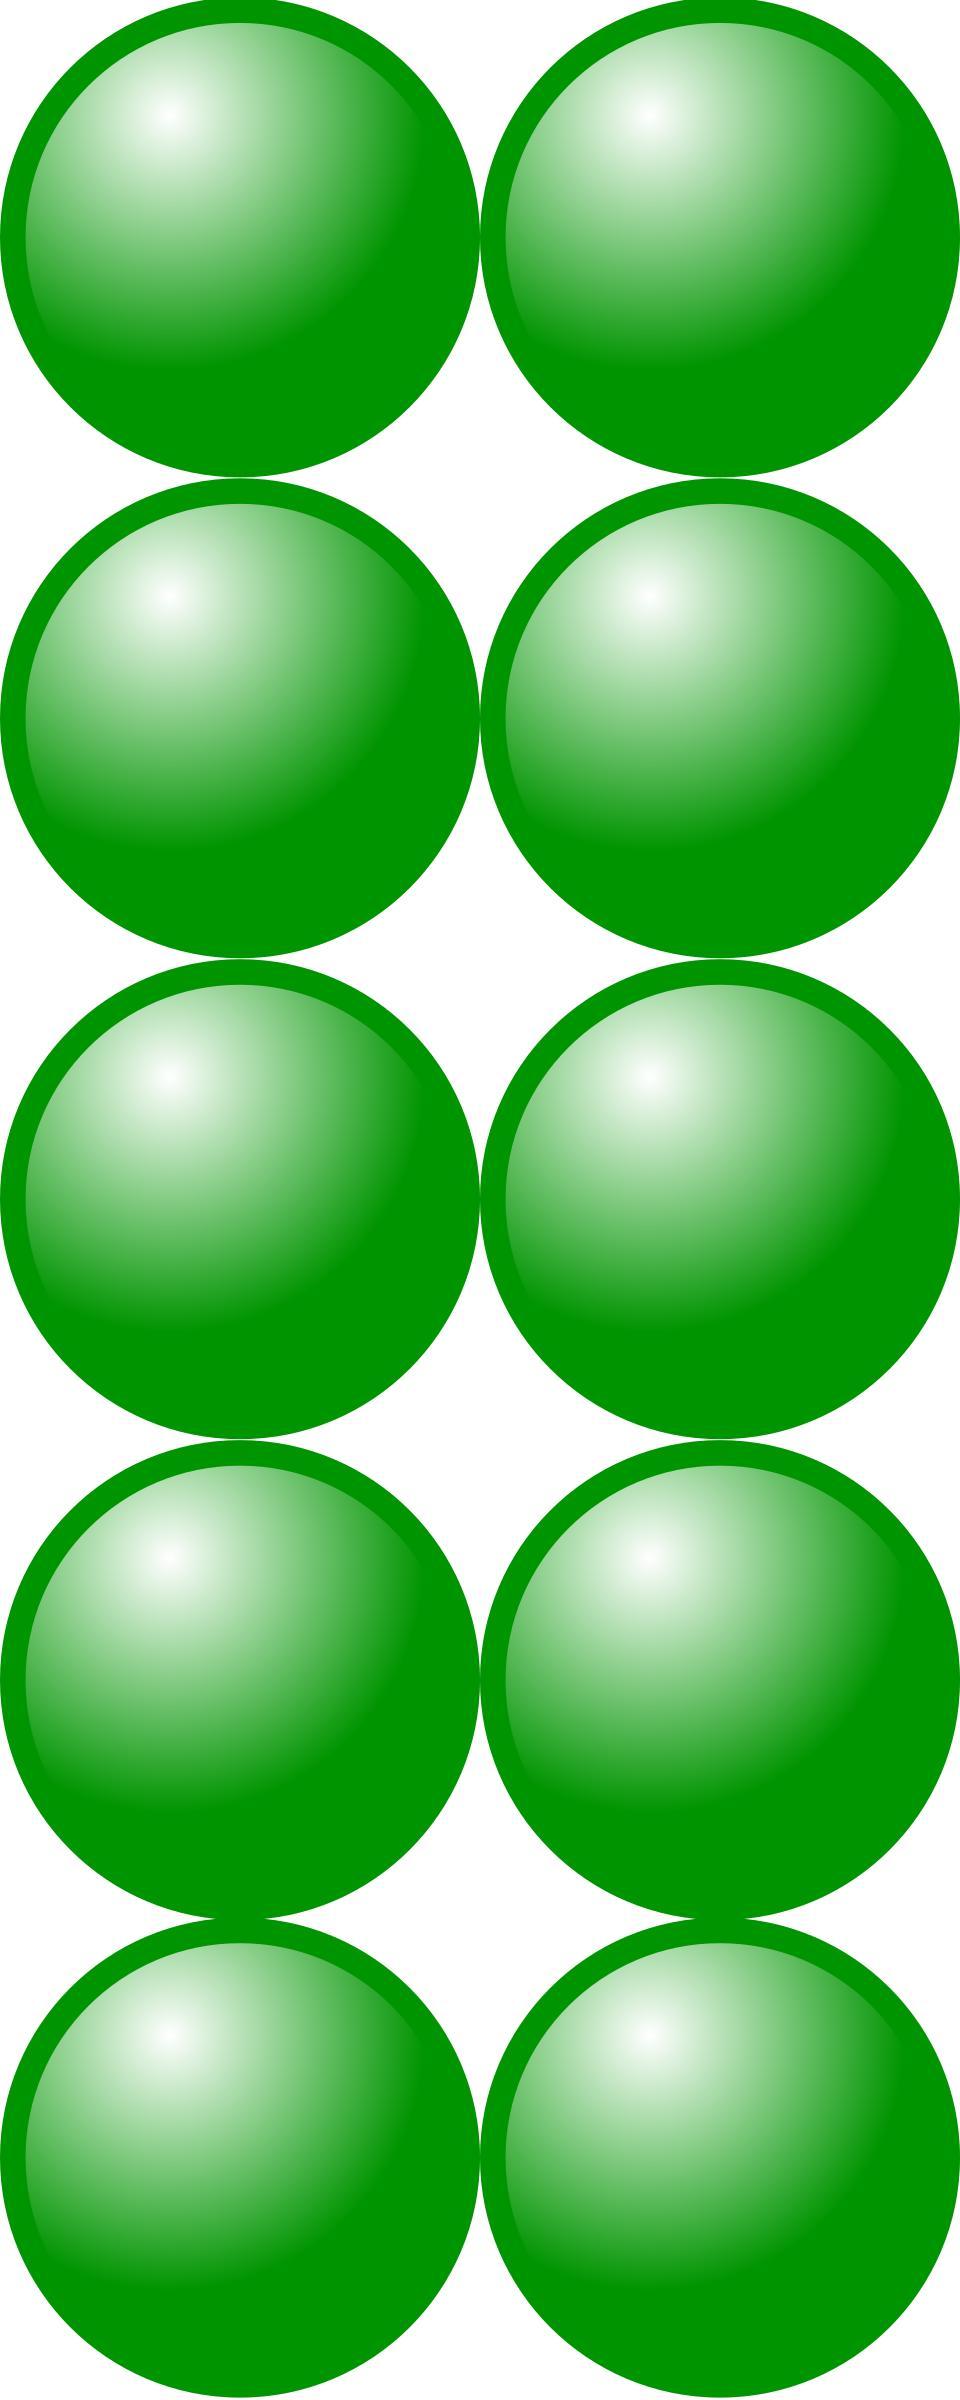 Beads quantitative picture for multiplication 5x2 png transparent